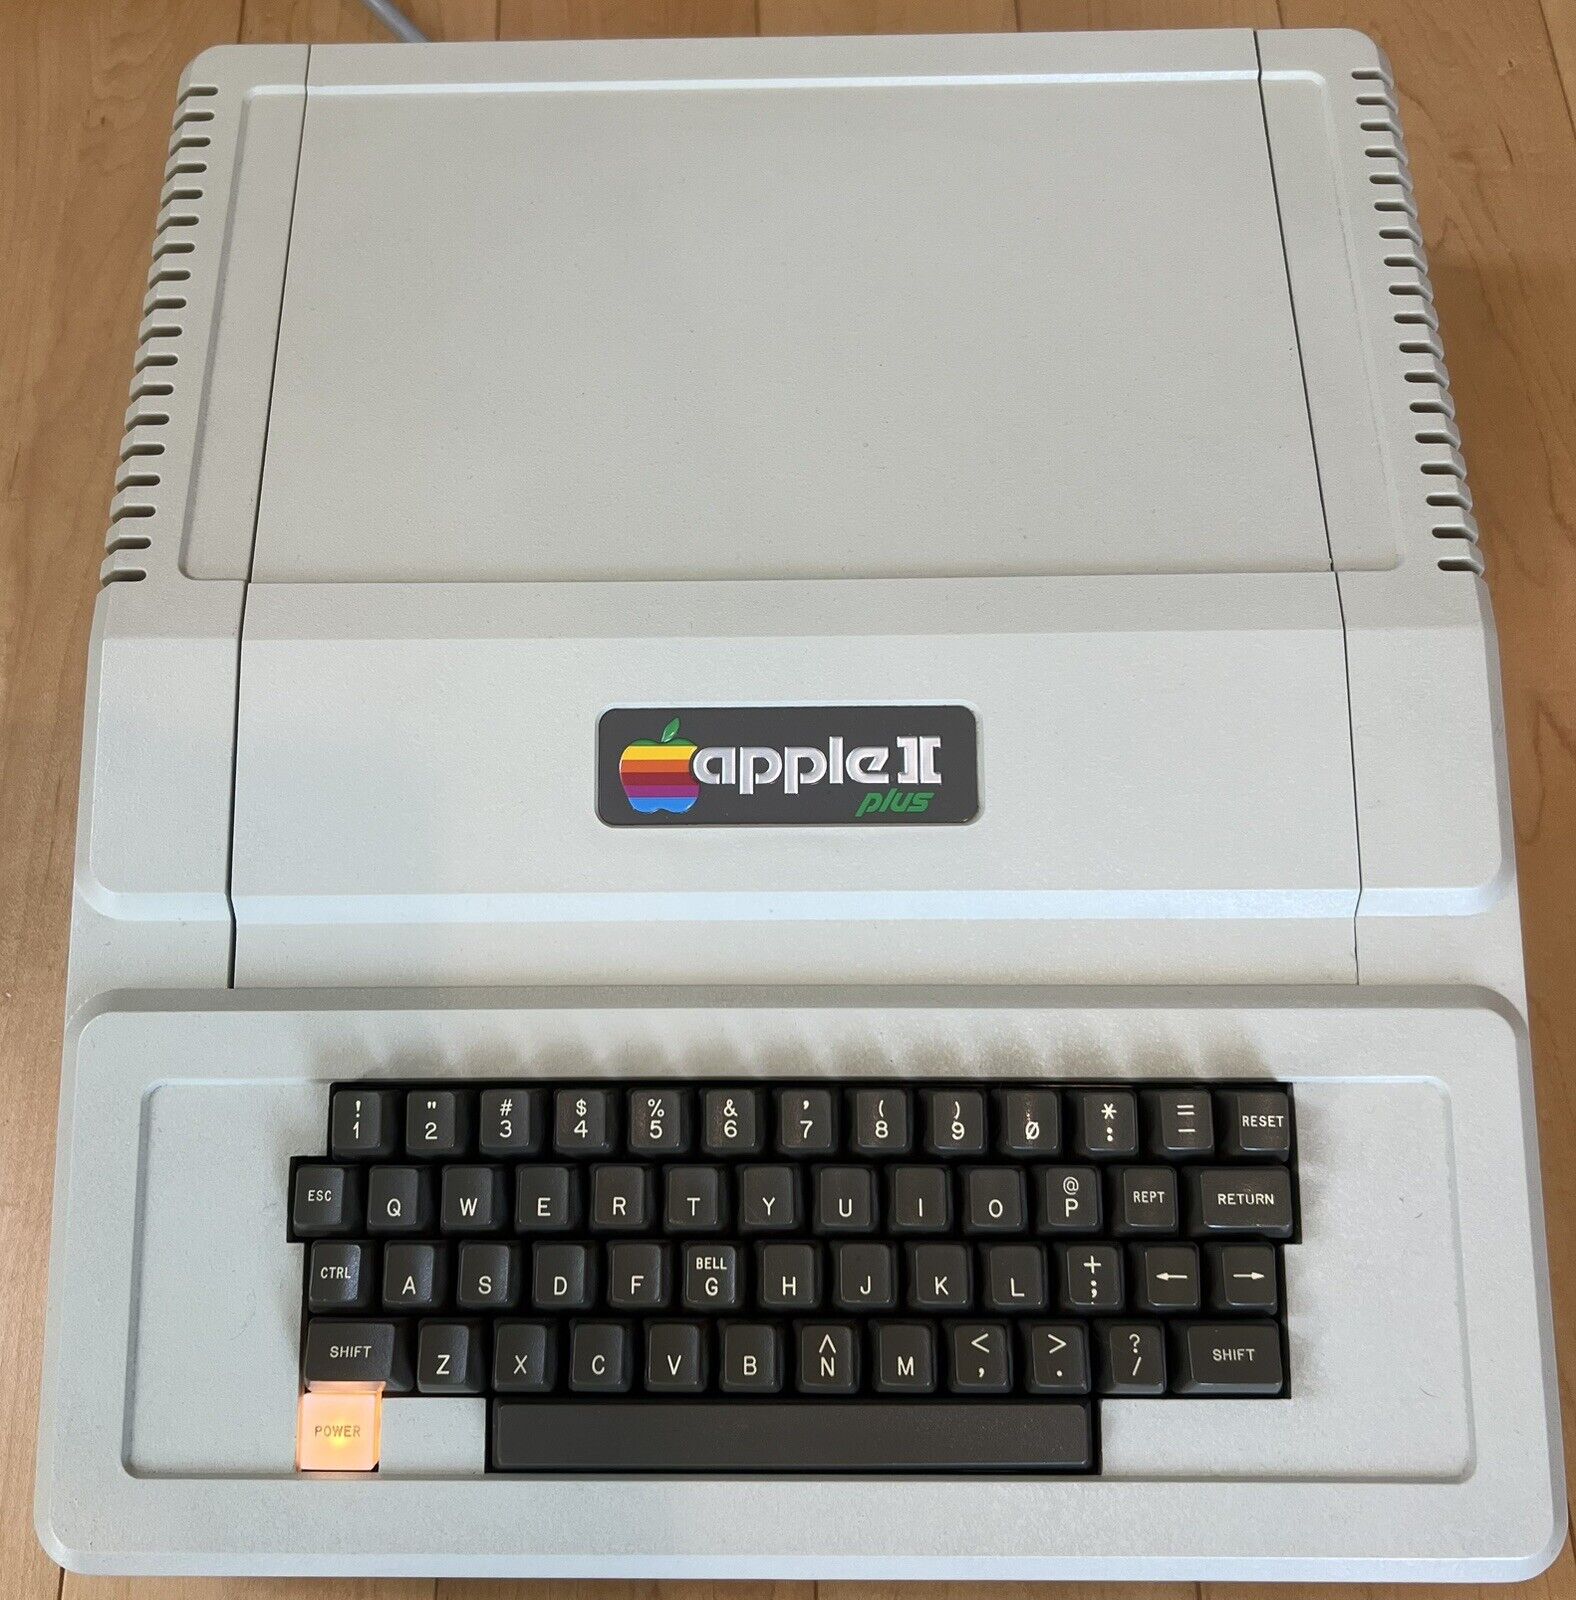 Apple II Plus Computer with 16KB Language Card, Disk II Drive & Box, Working